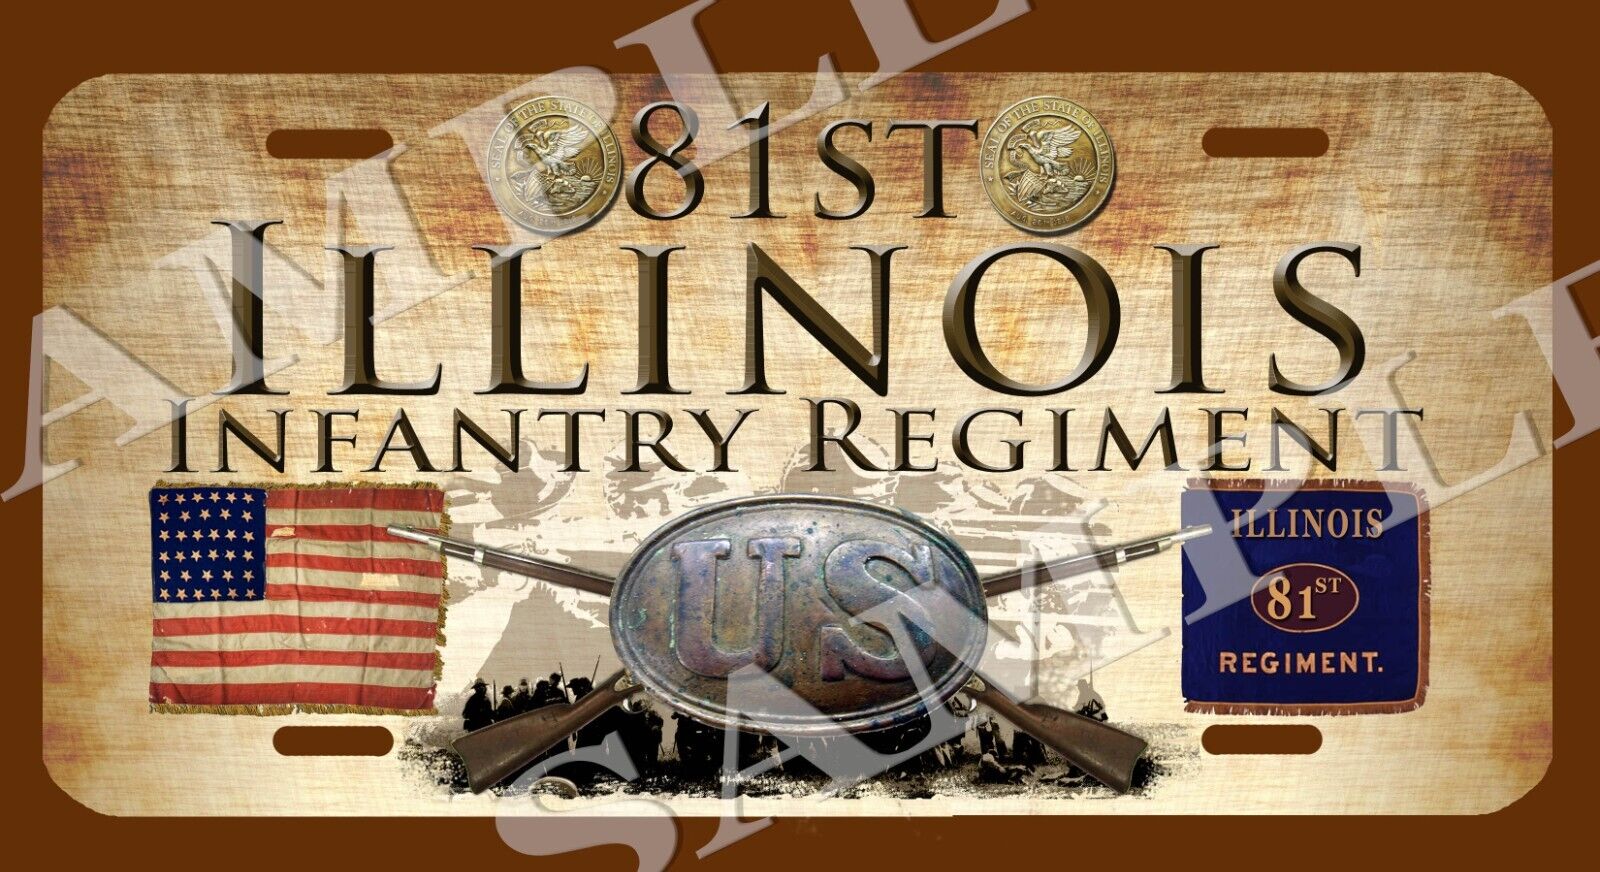 81st Illinois Infantry Regiment American Civil War Themed vehicle license plate